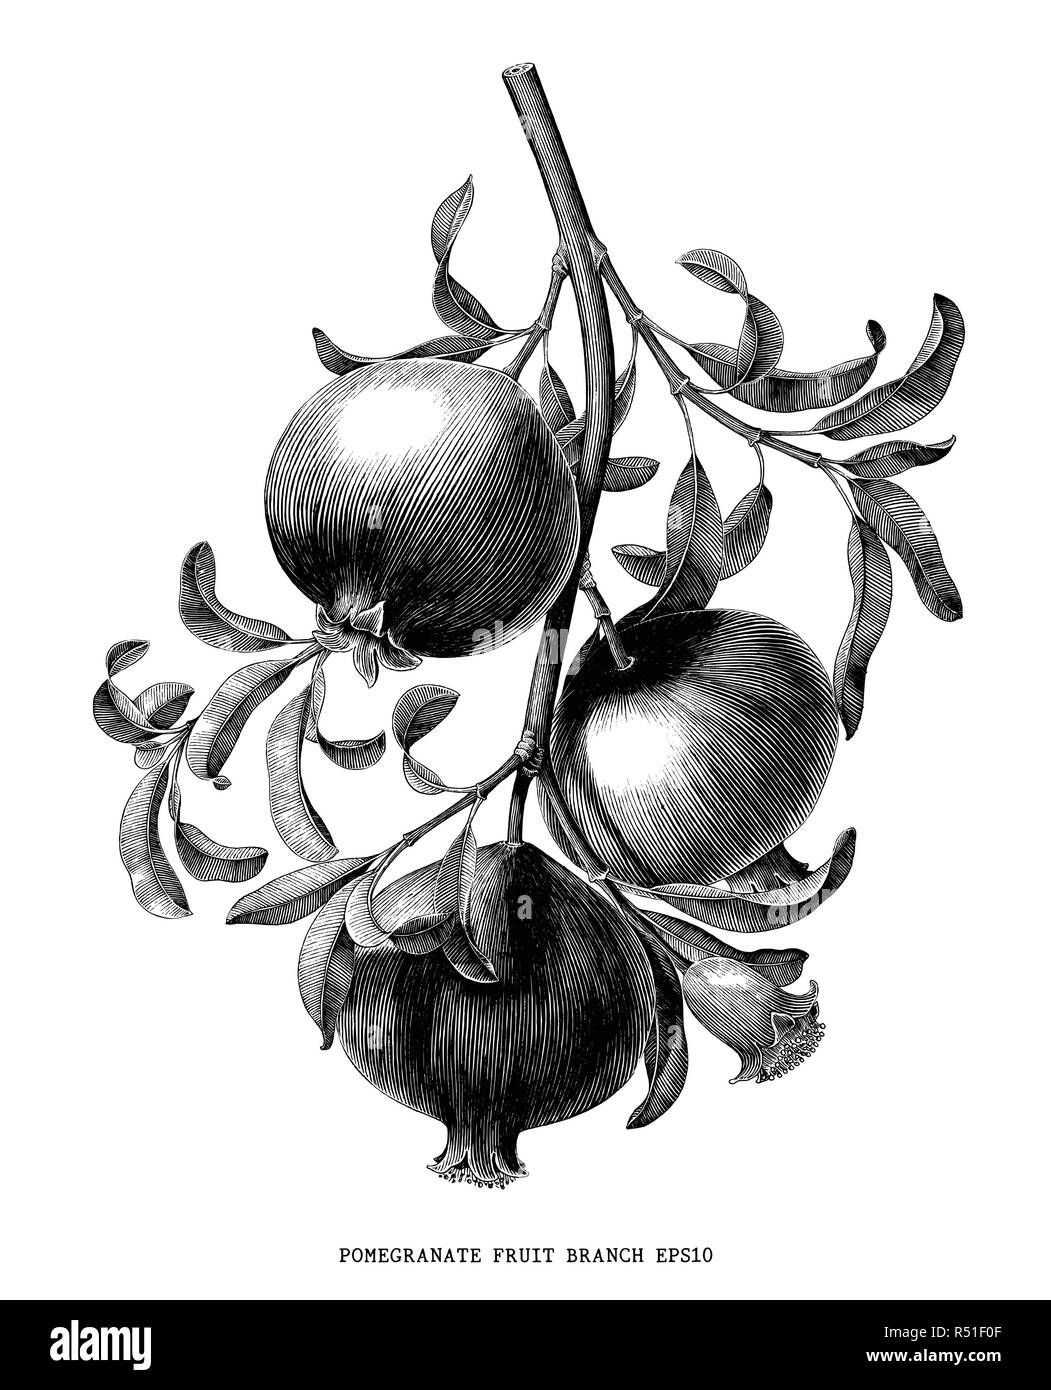 Pomegranate fruit branch botanical vintage engraving illustration isolated on white background Stock Vector